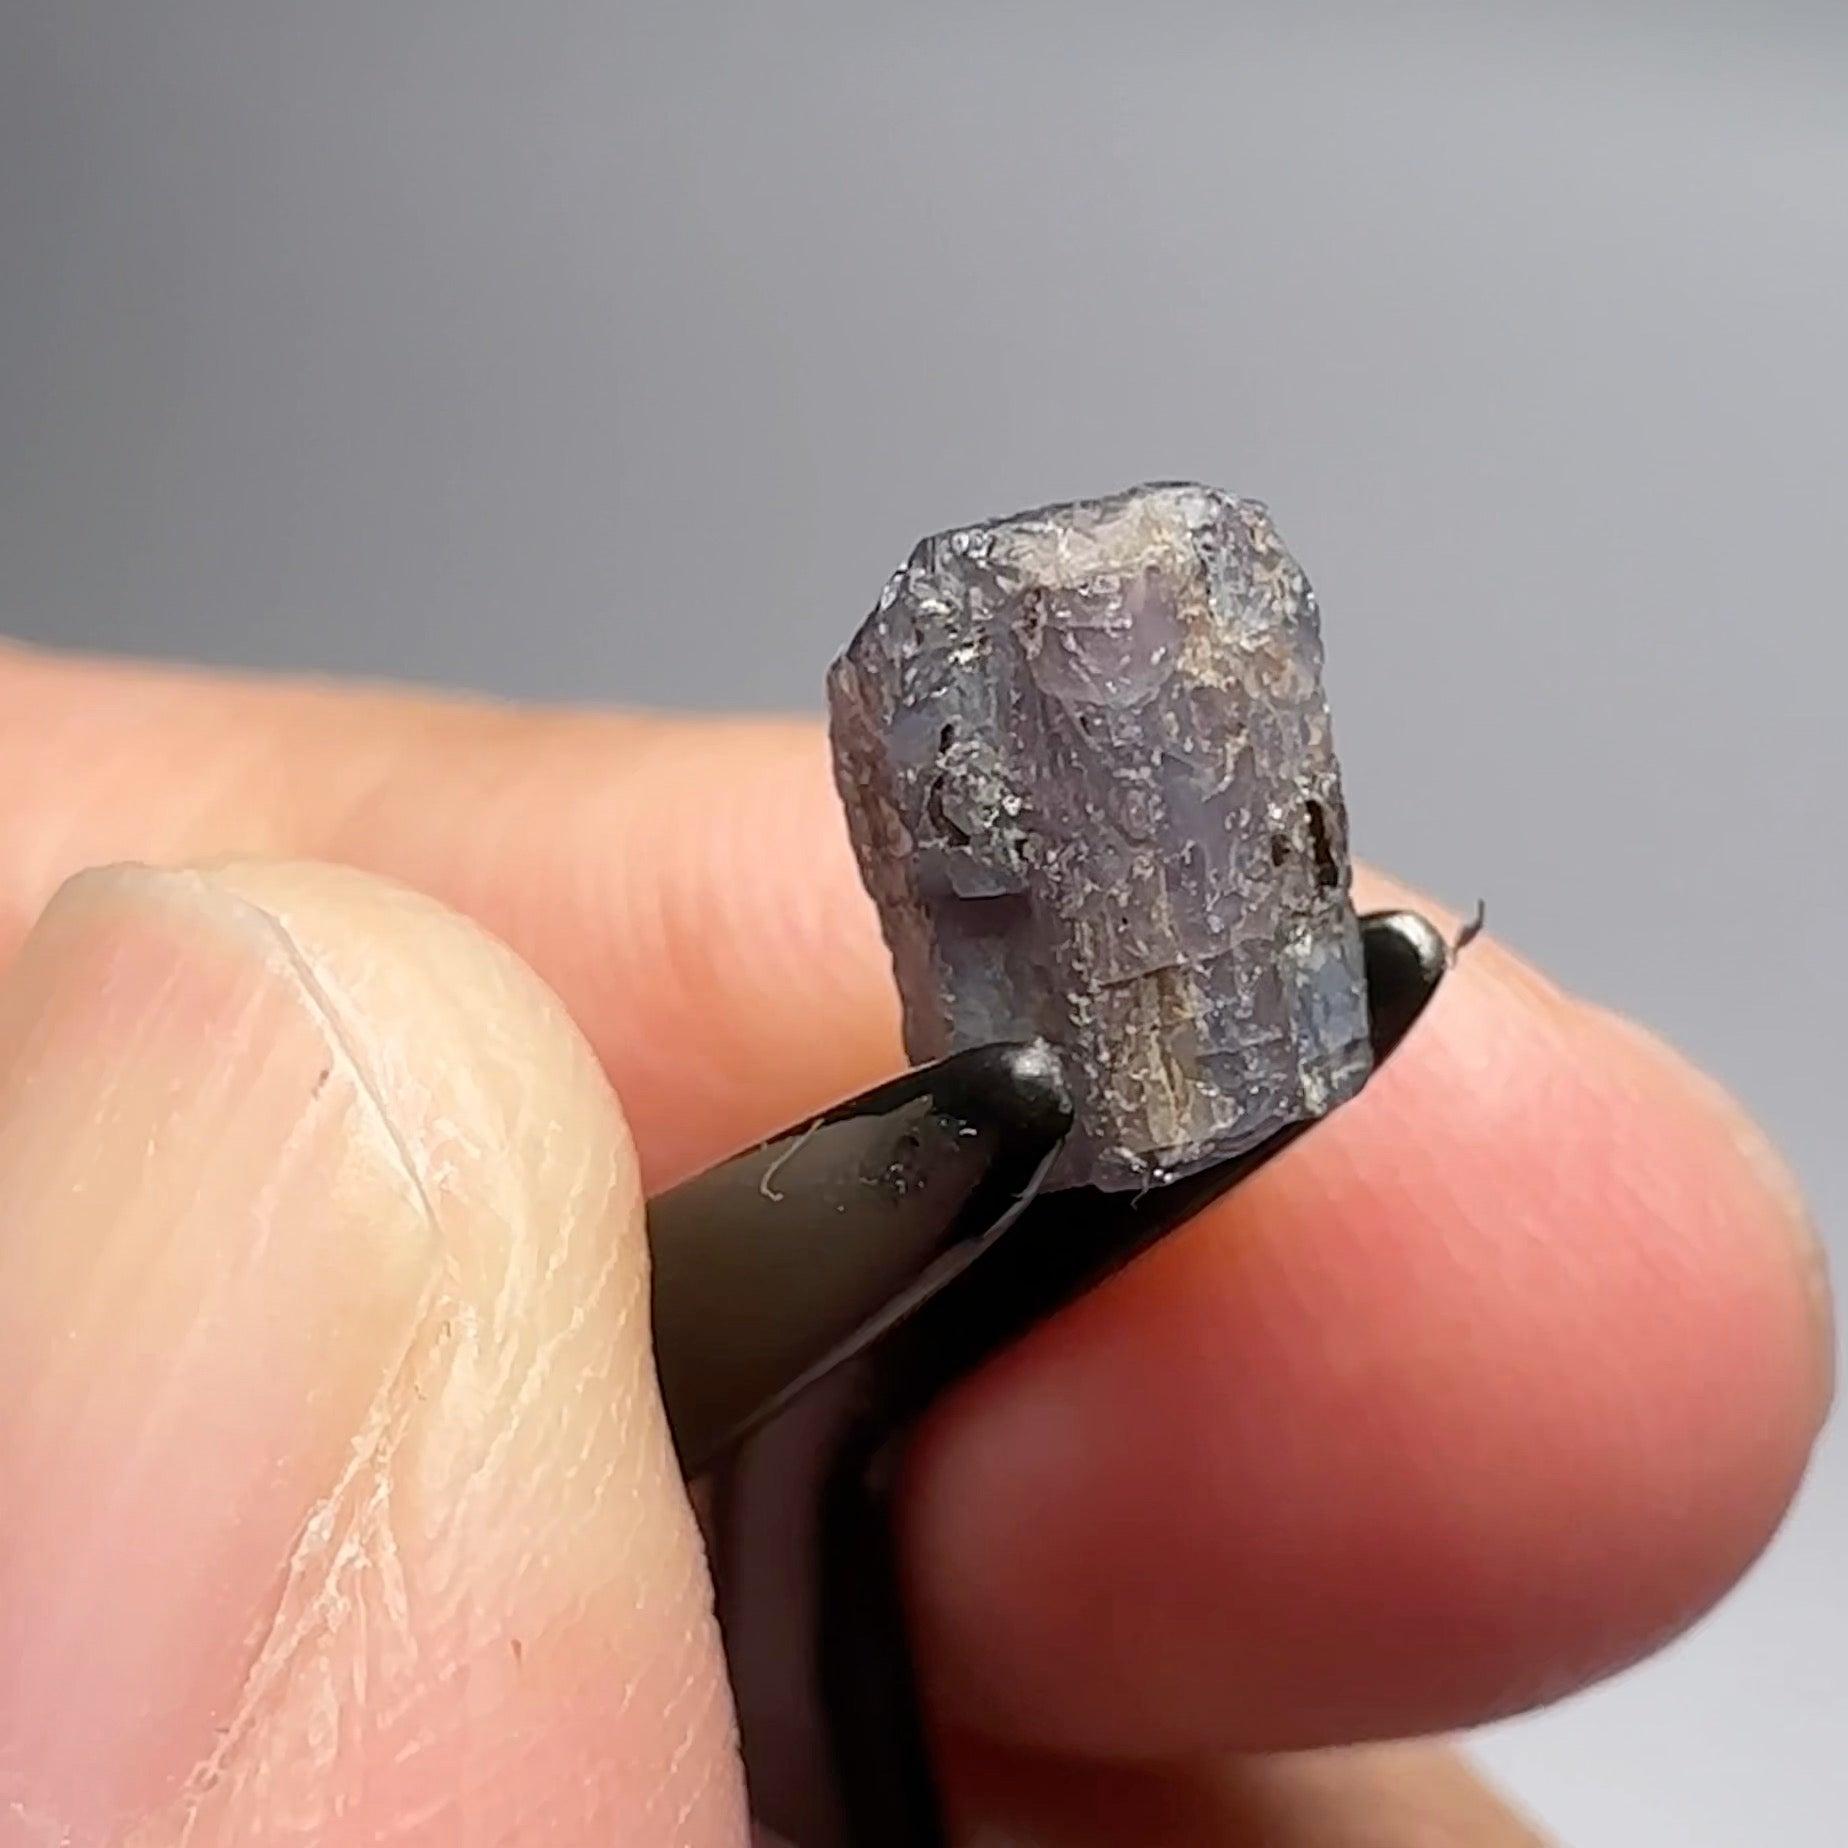 3.25ct Alexandrite Crystal, Tanzania, Untreated Unheated. 7 x 6.05 x 4.2mm